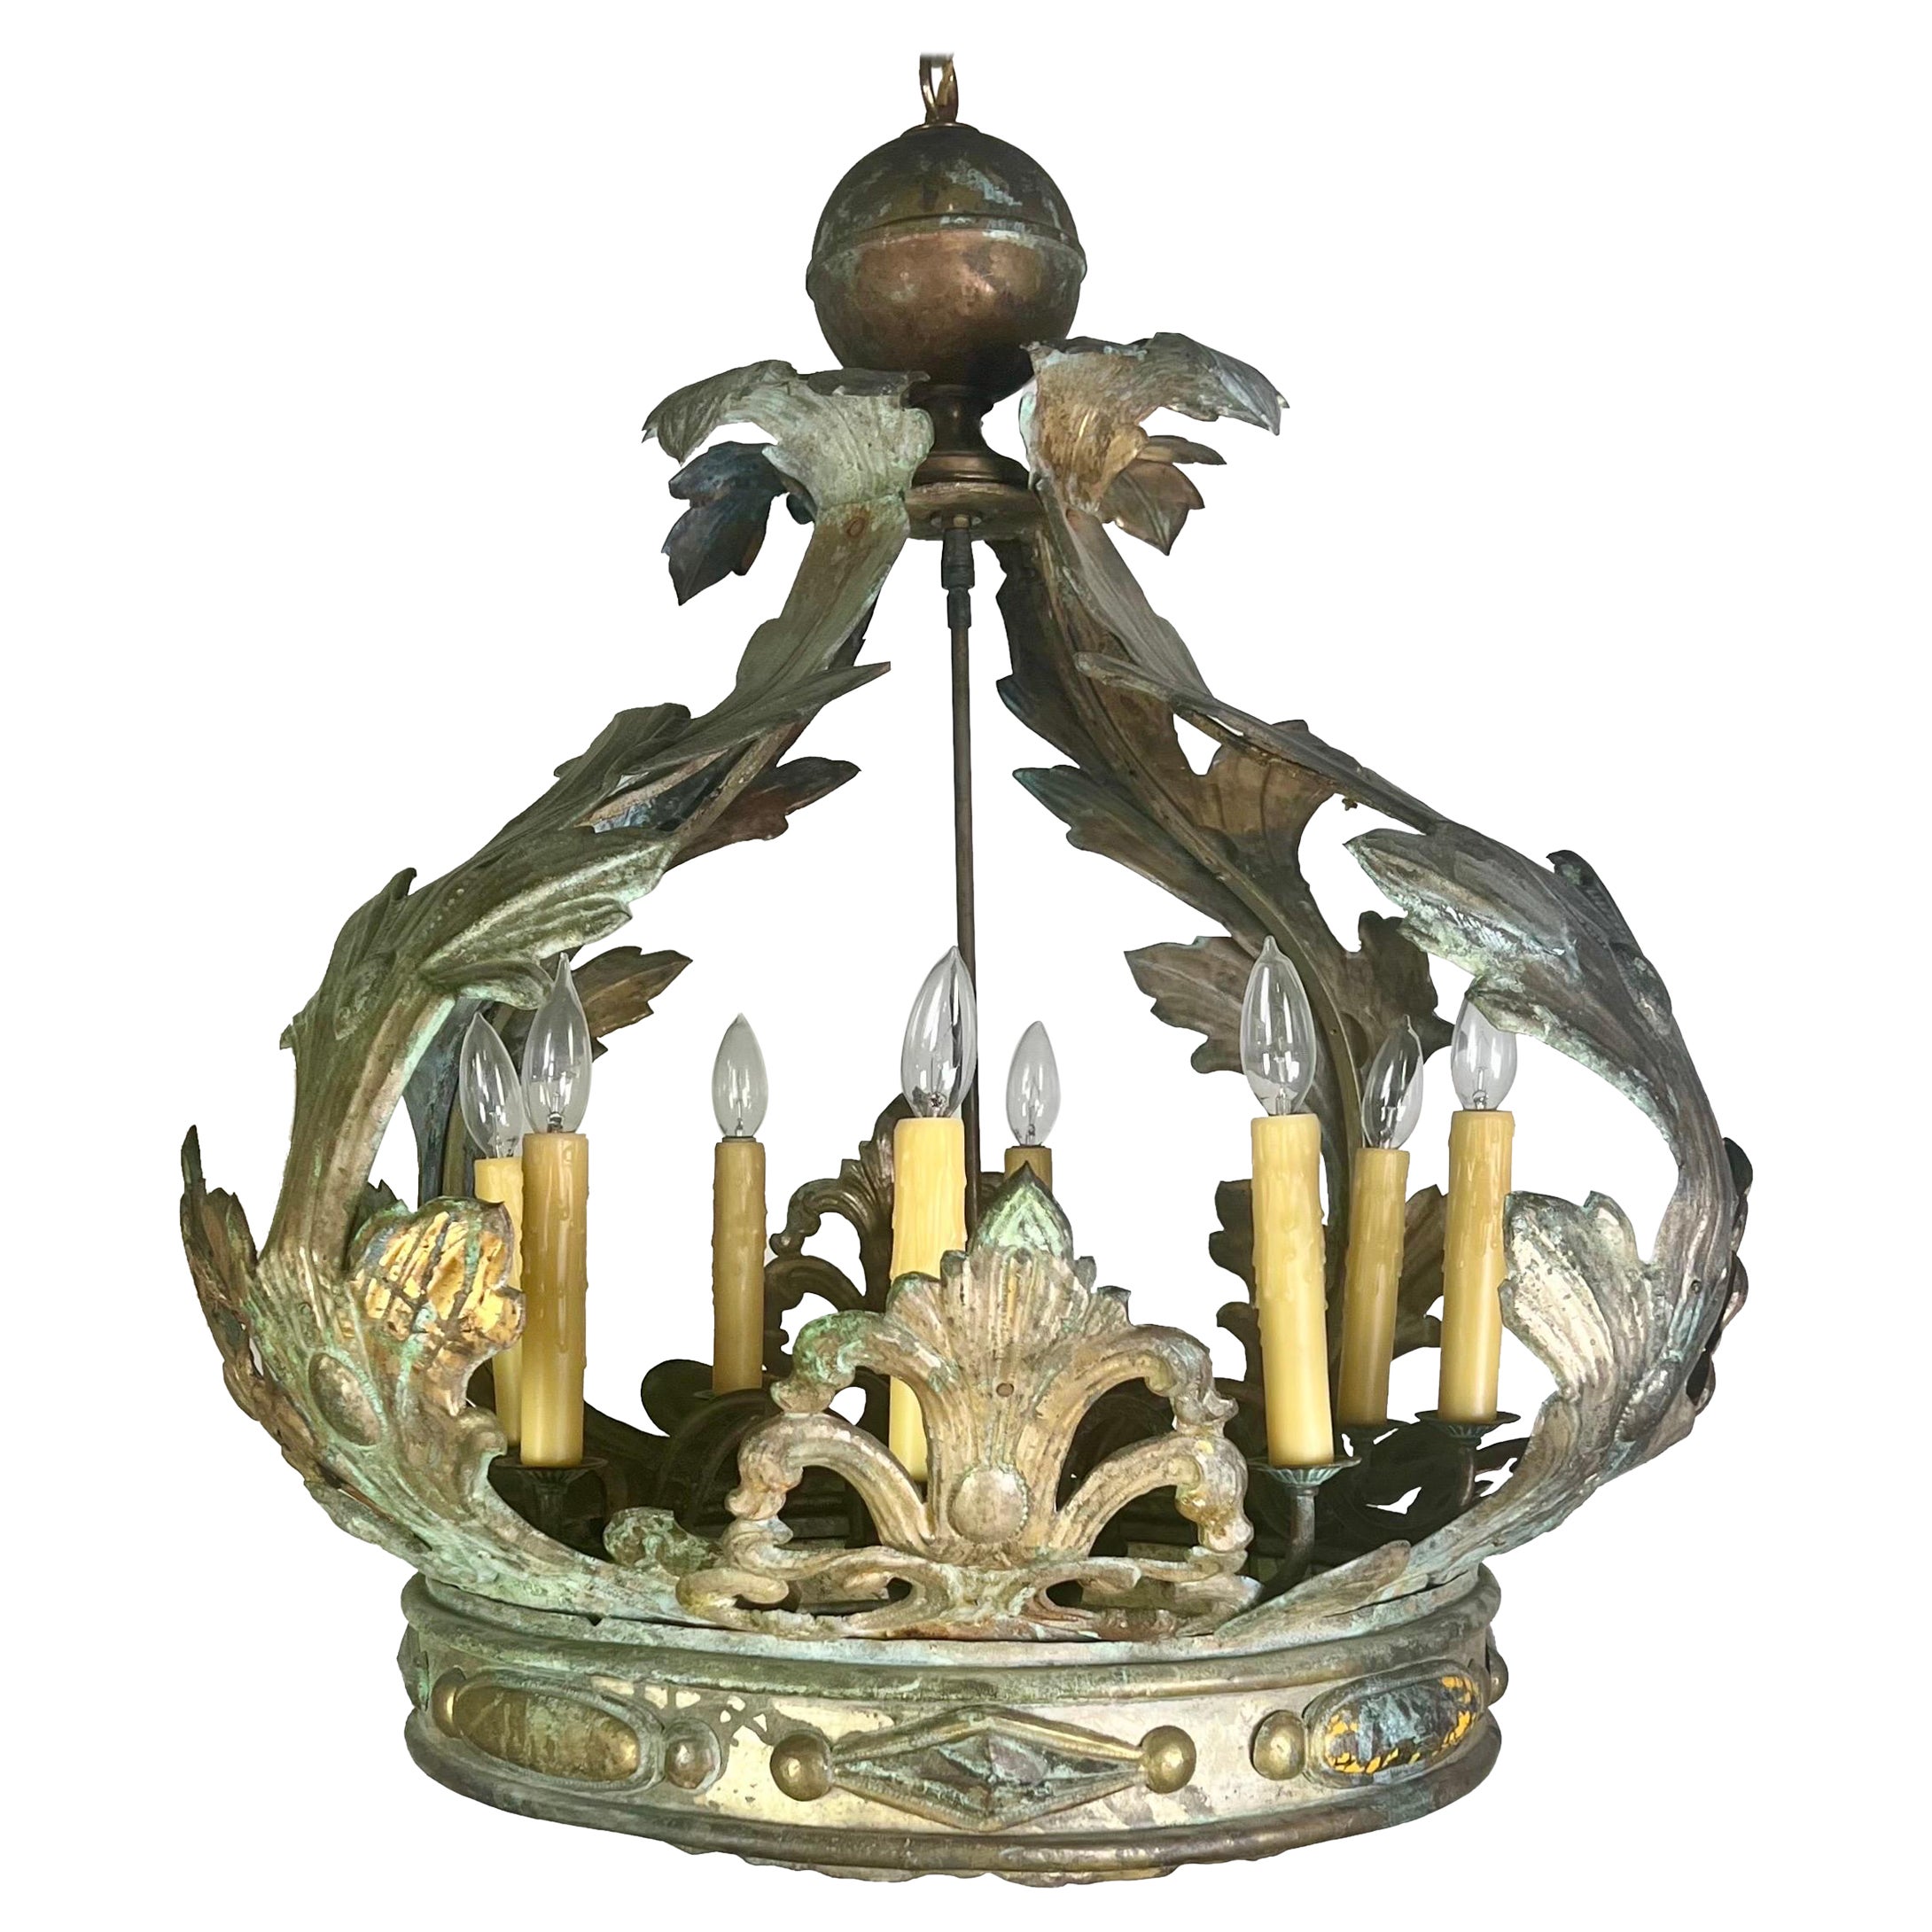 Unique Italian  Crown 8-Light Chandelier C. 1900's